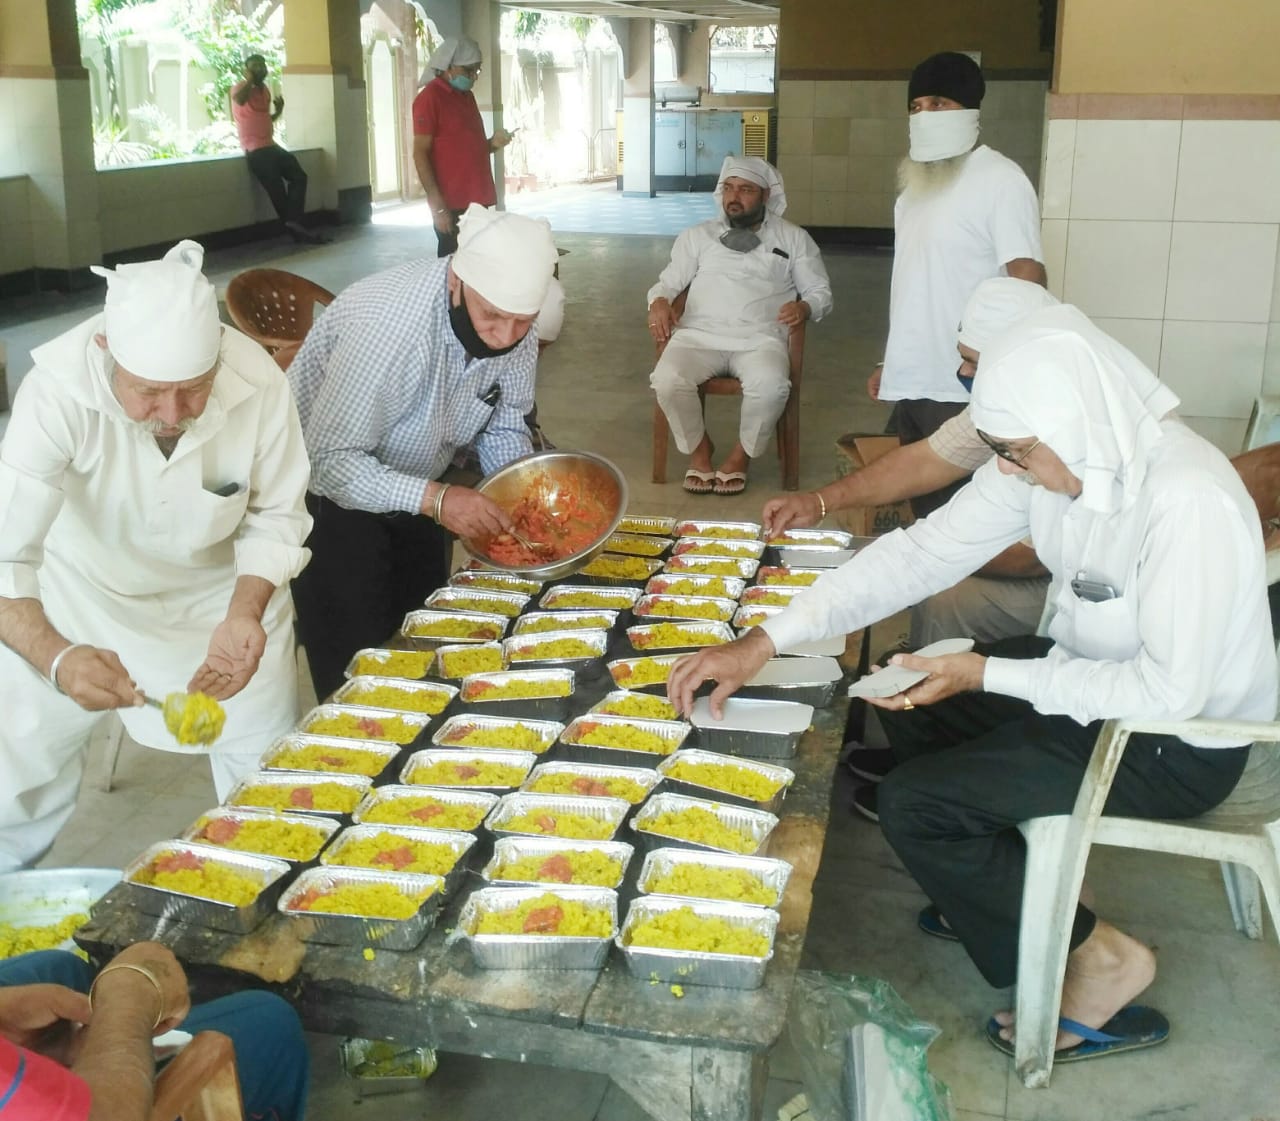 Fight against corona : gurudwara sri guru nanak satsang sabha is preparing 300 packets for the needy people in Lockdown